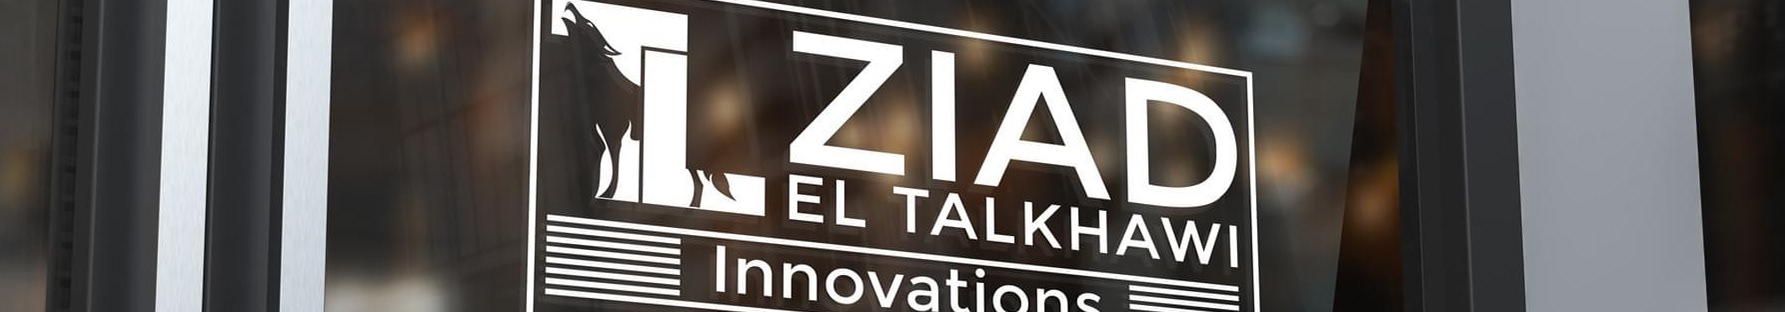 ZIAD EL TALKHAWI Innovations's profile banner